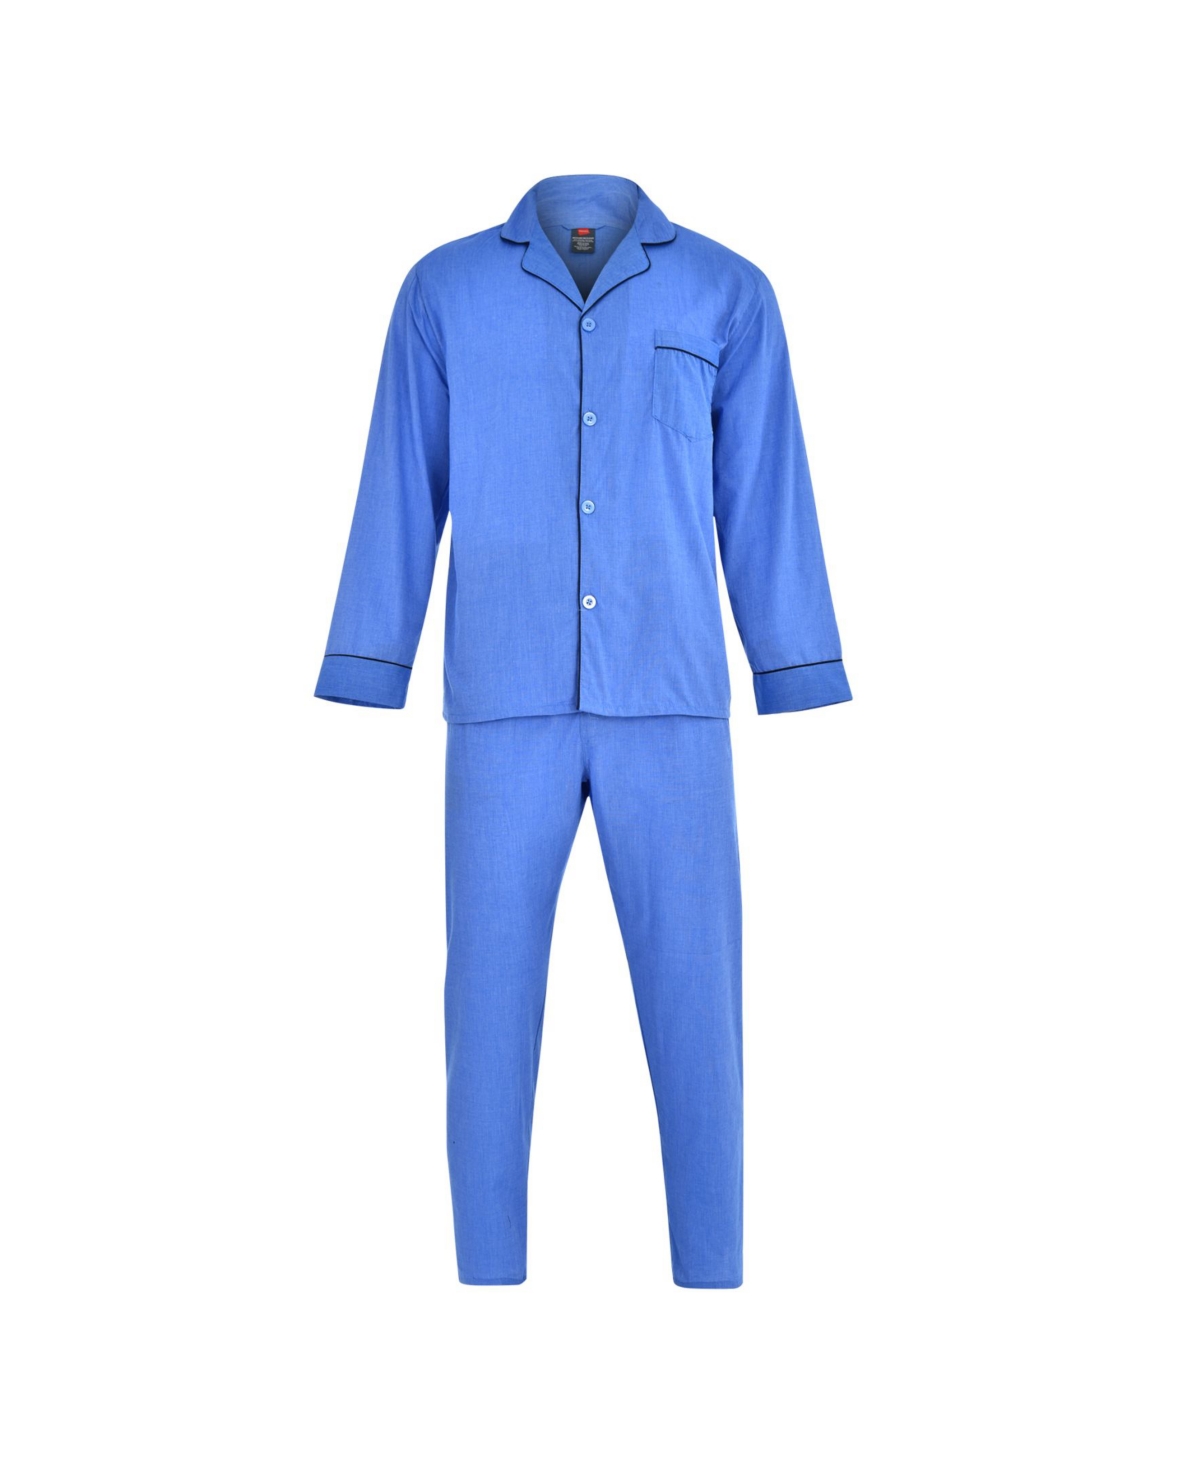 Hanes Platinum Hanes Men's Cvc Broadcloth Pajama Set